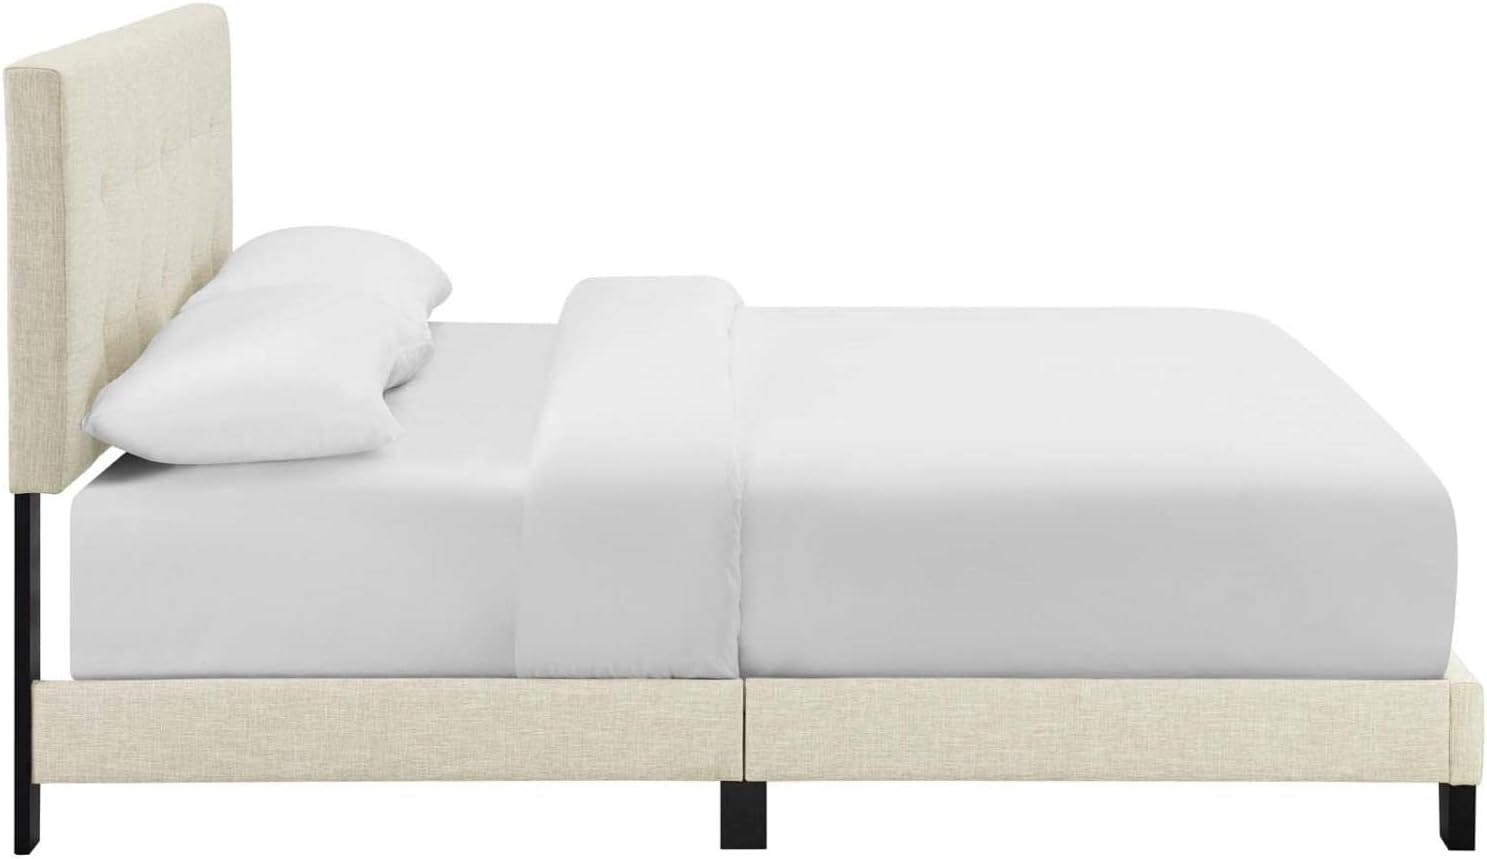 Amira Chic Beige Queen Platform Bed with Tufted Velvet Headboard